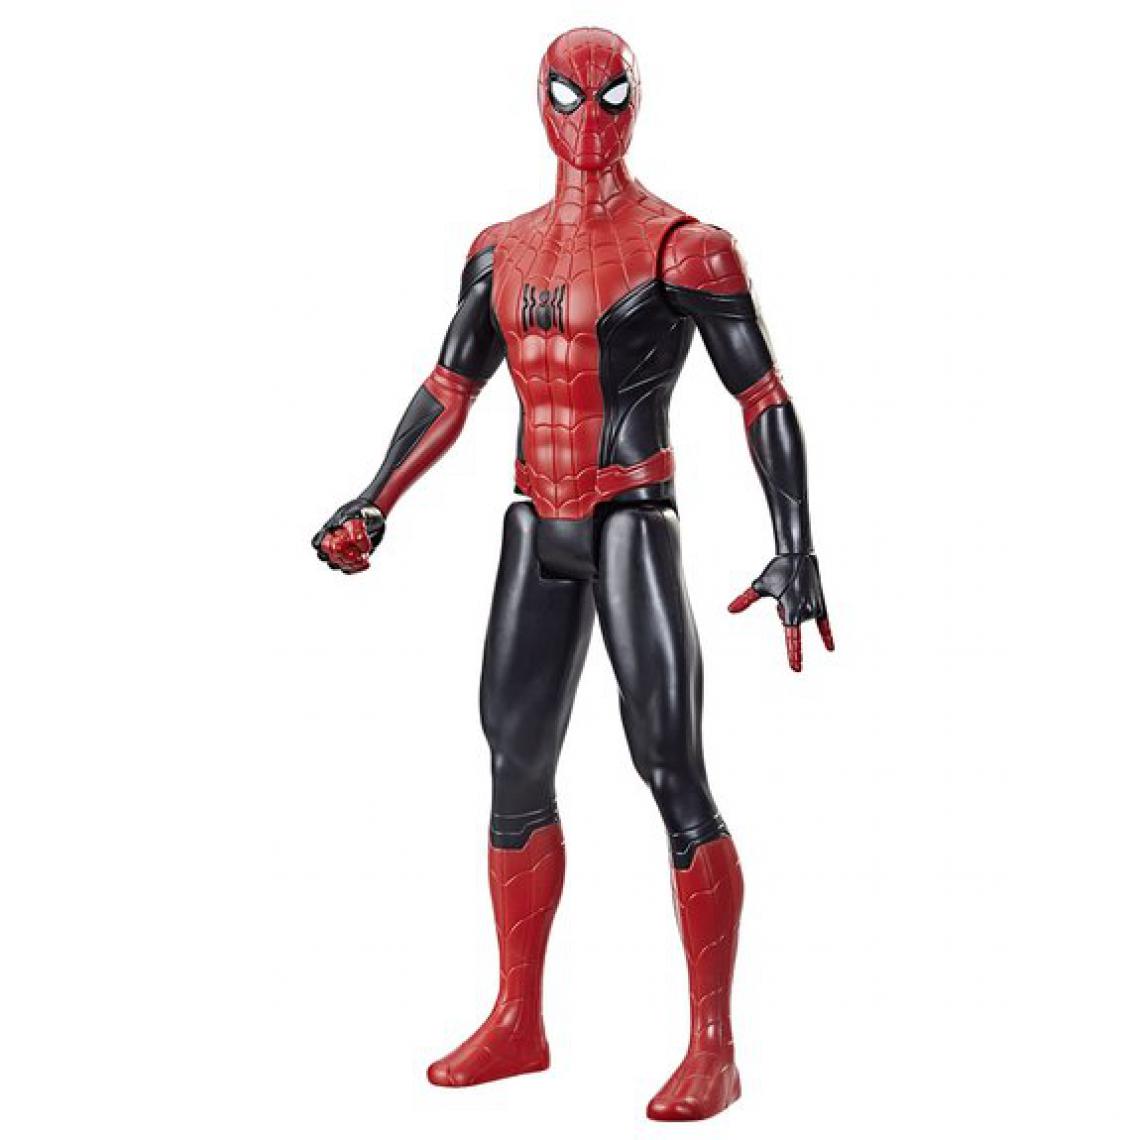 Ludendo - Spider-Man 3 - Figurine Titan 30 cm - Films et séries